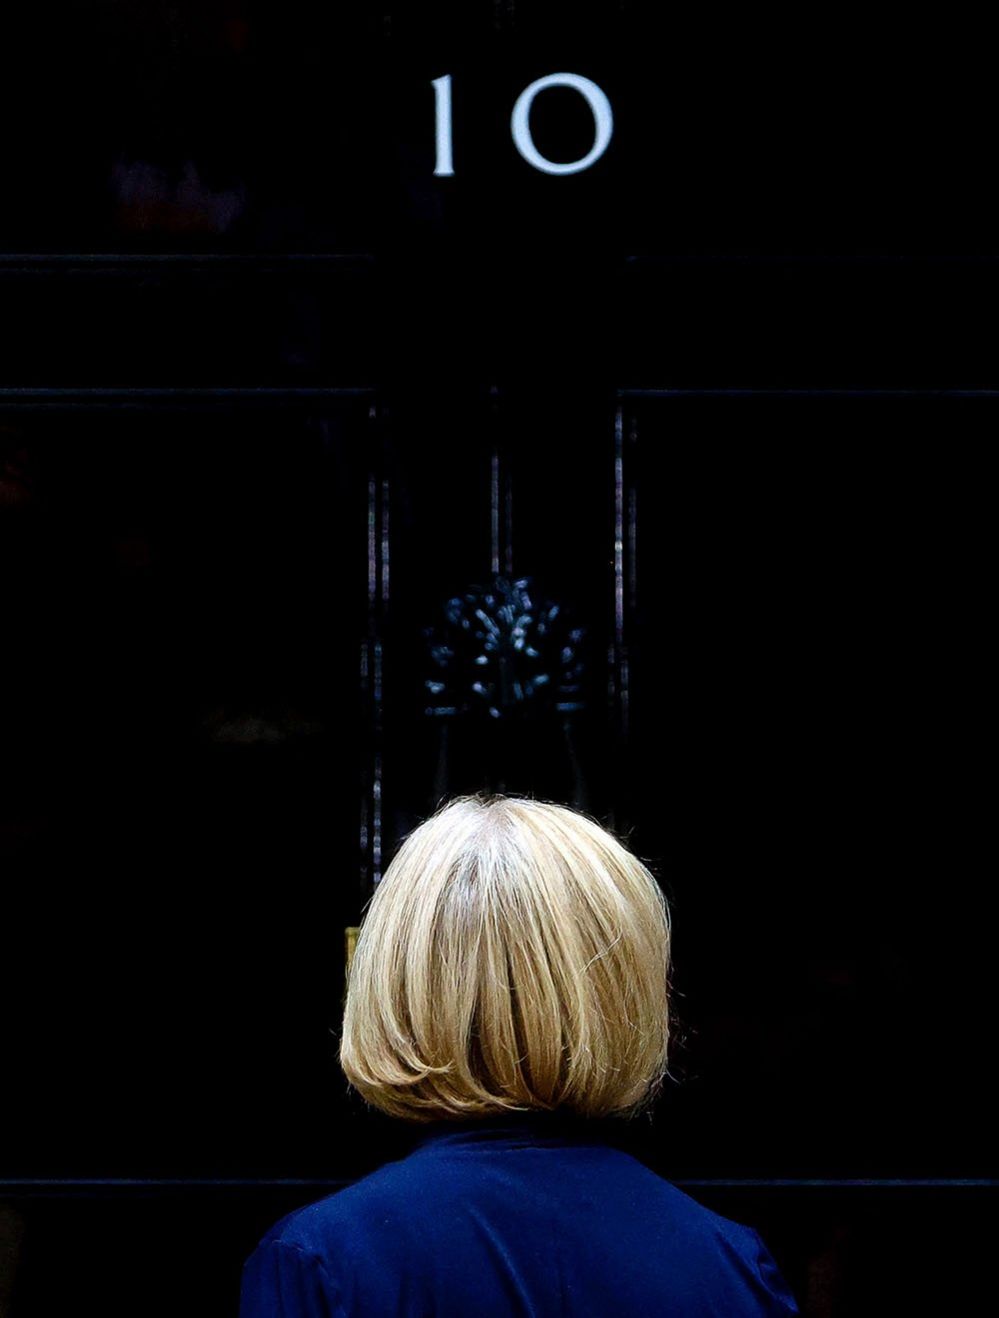 New Prime Minister Liz Truss enters Number 10 Downing Street, 6 September 2022